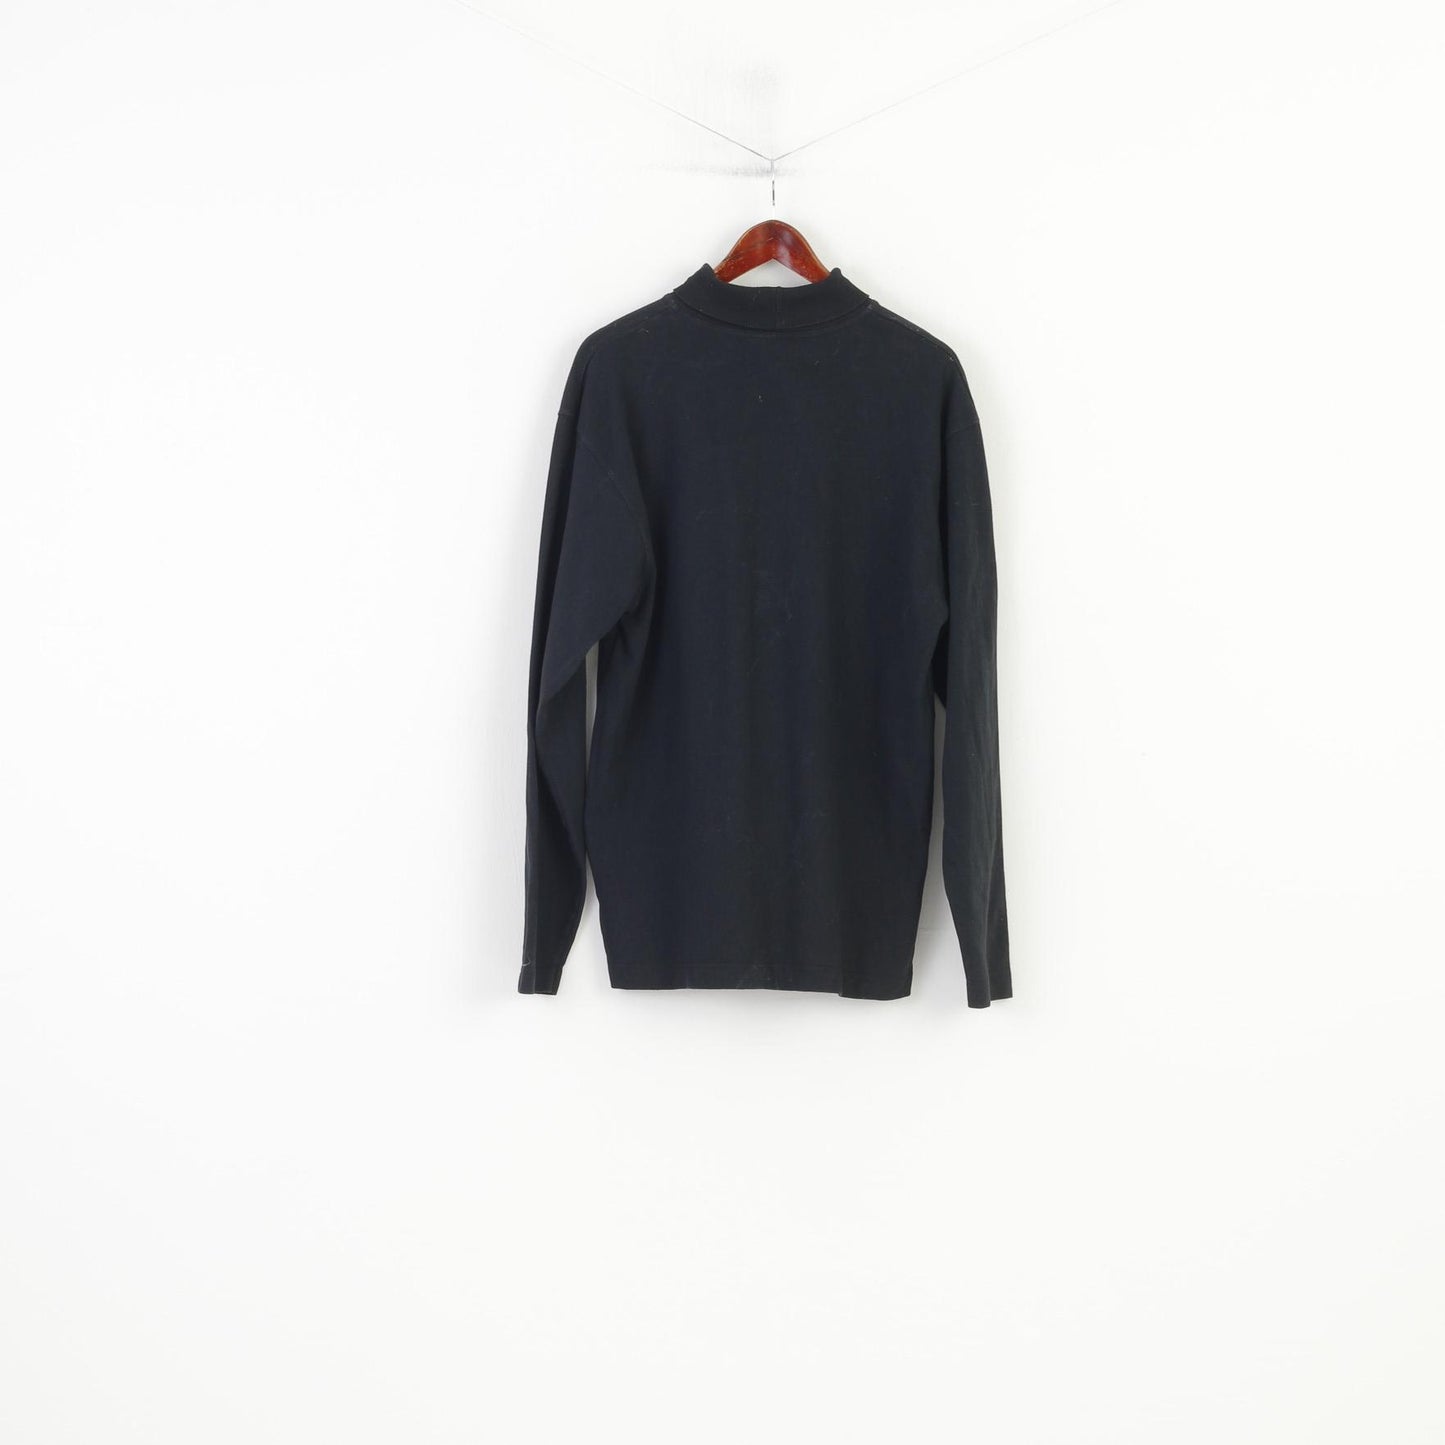 Puma Men XL Shirt Black Vintage Golf Sportswear Longsleeve Cotton Top